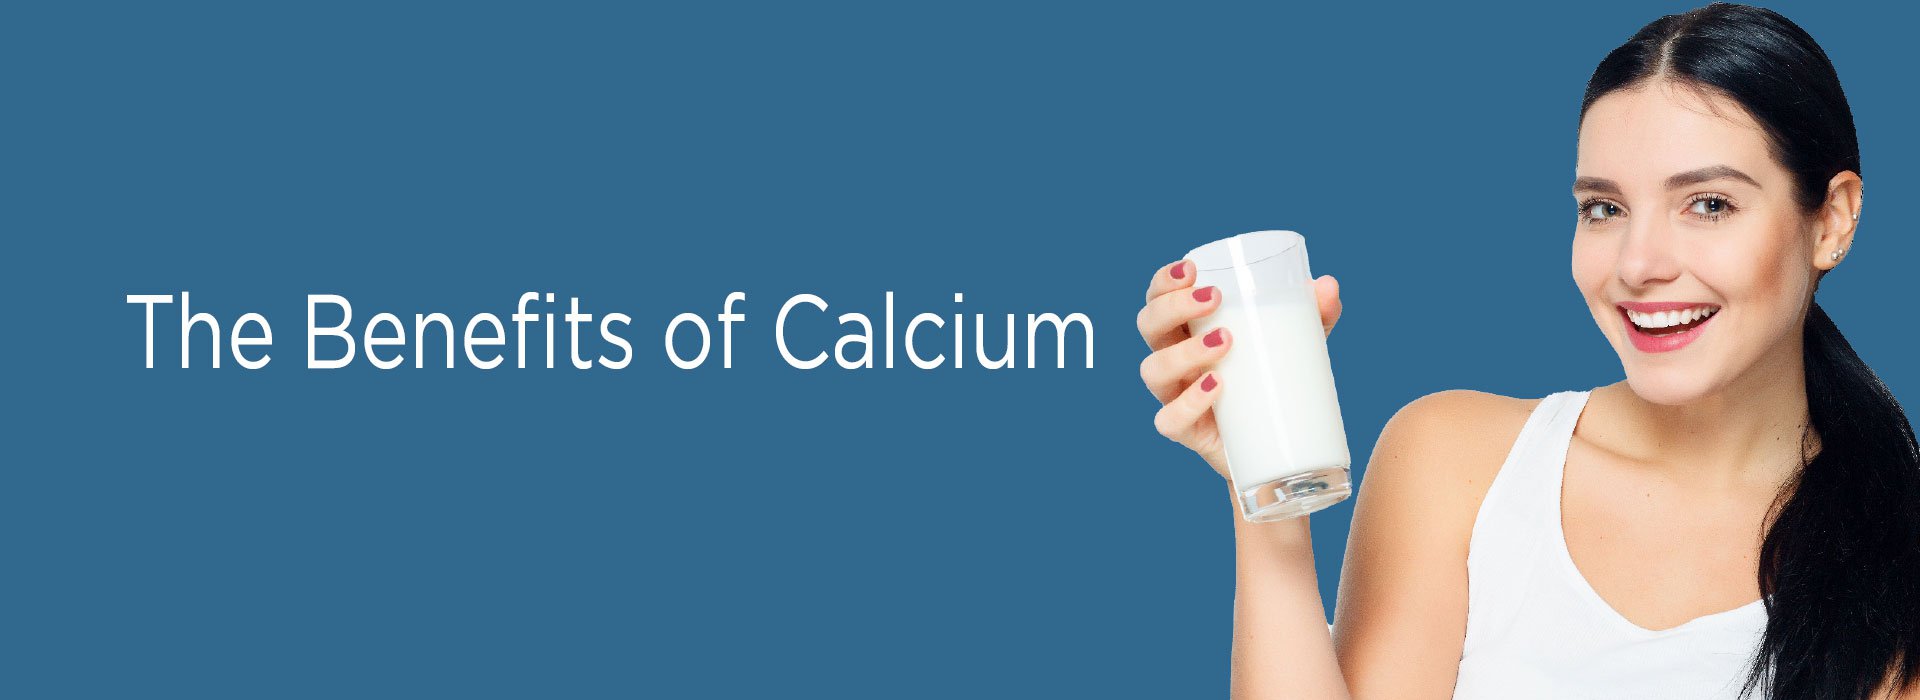 New Image International:The Benefits Of Calcium